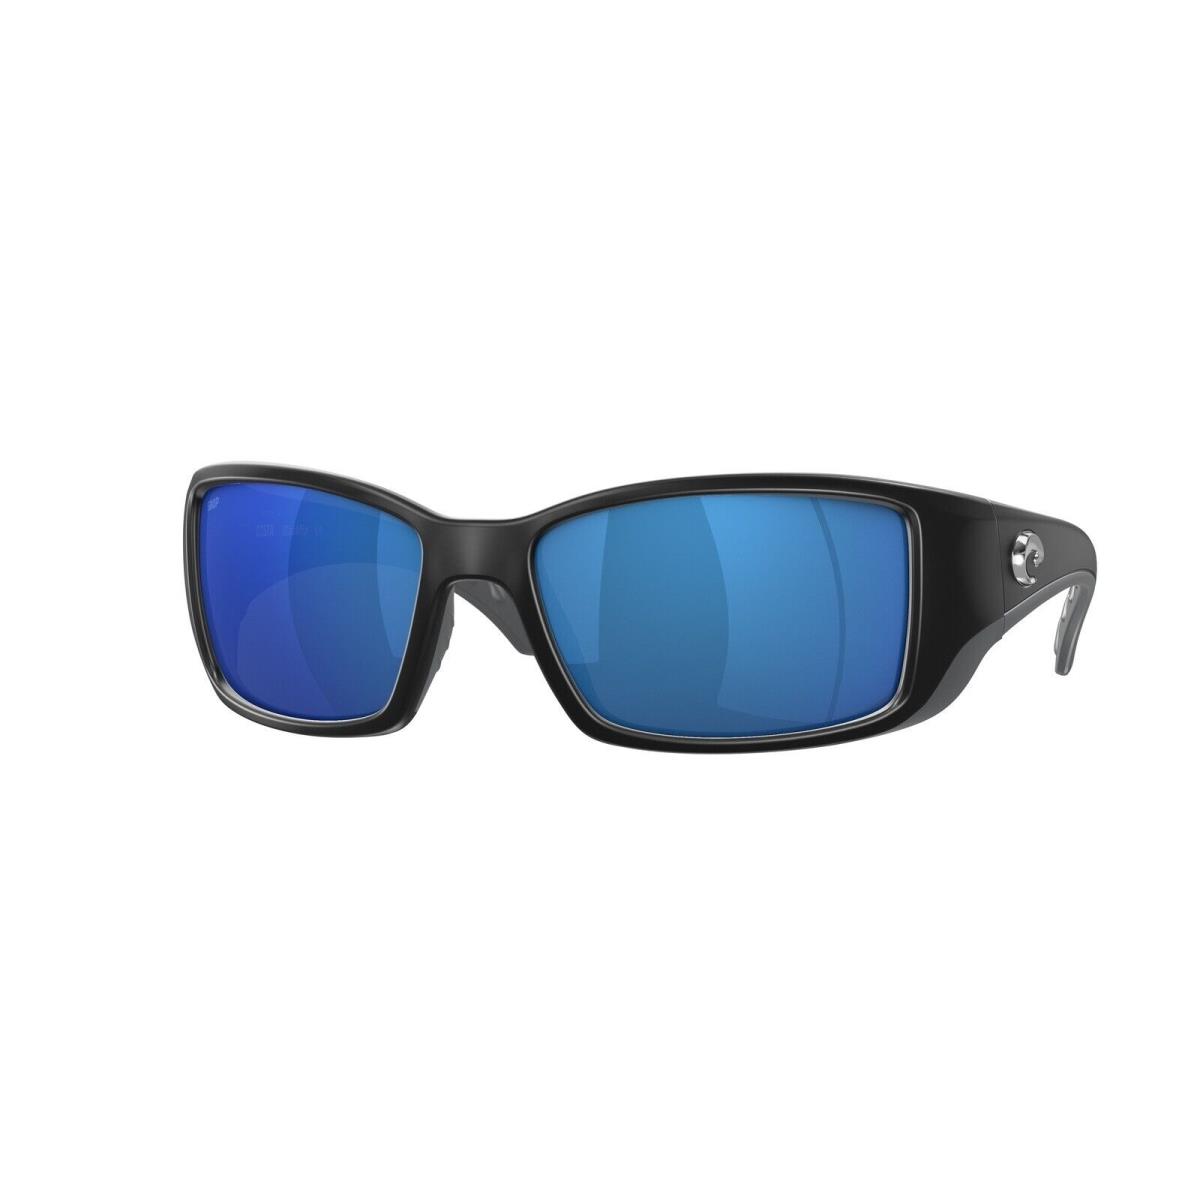 Costa Del Mar Blackfin Sunglasses Matte Black w/ Blue Mirror Polarized 580P Lens - Frame: Black, Lens: Blue